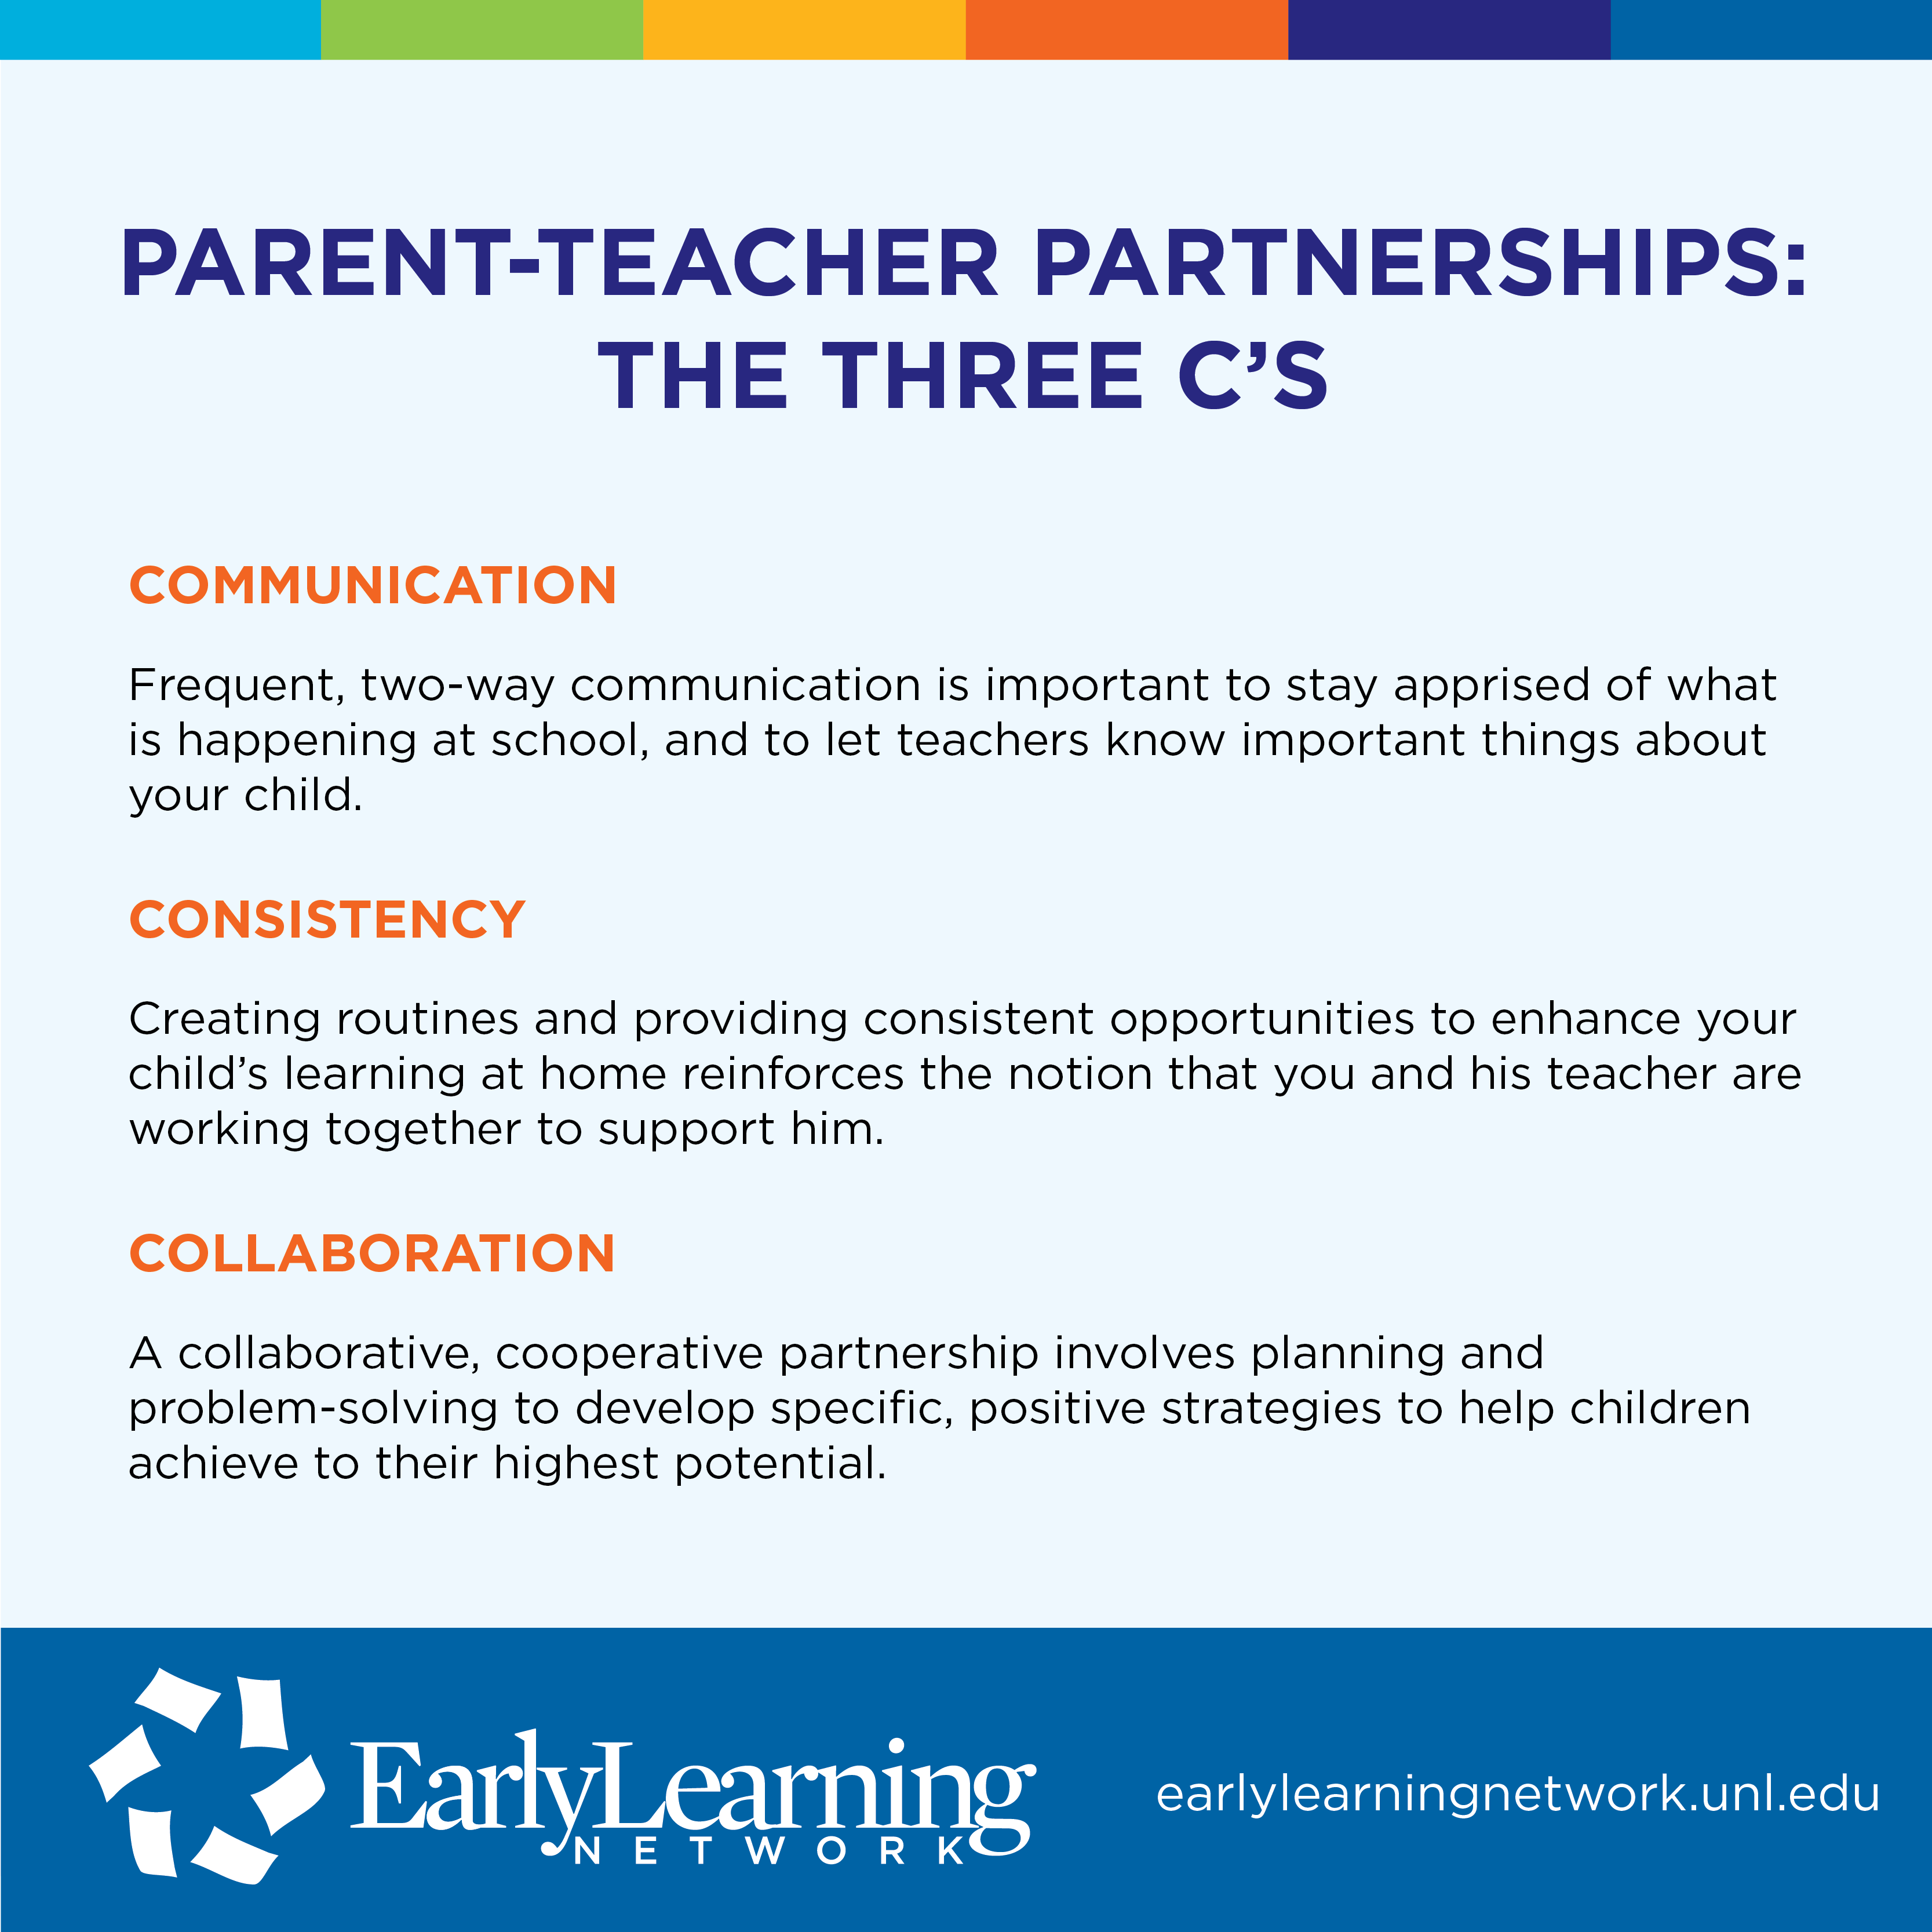 Three C's to Parent-Teacher Partnerships